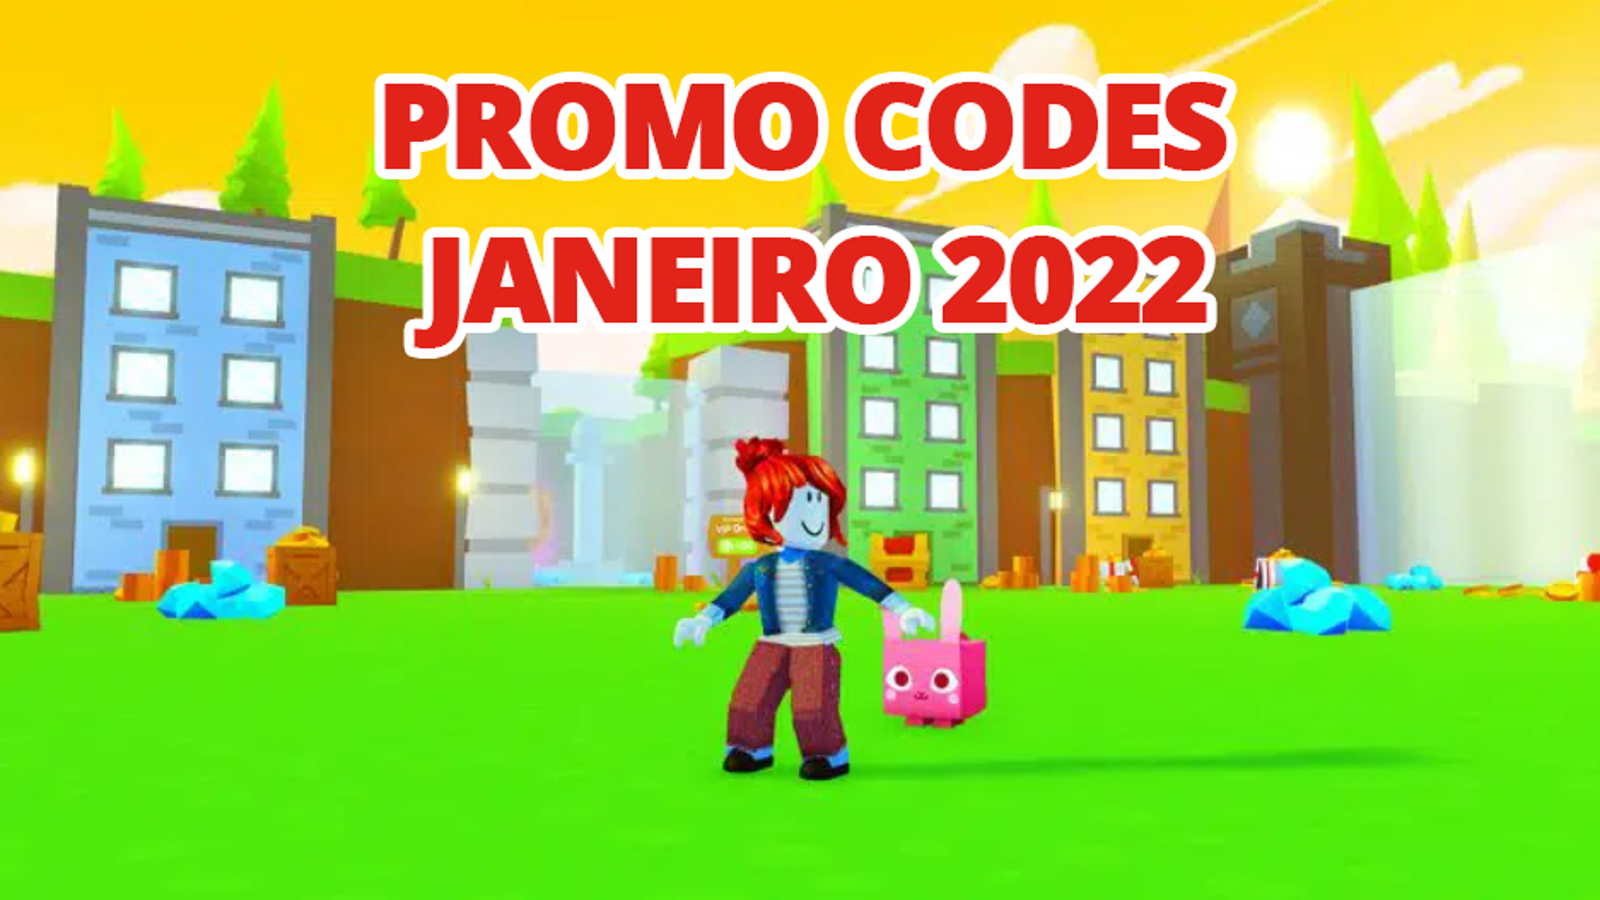 Roblox - Pet Simulator X - Promo Codes Janeiro 2022